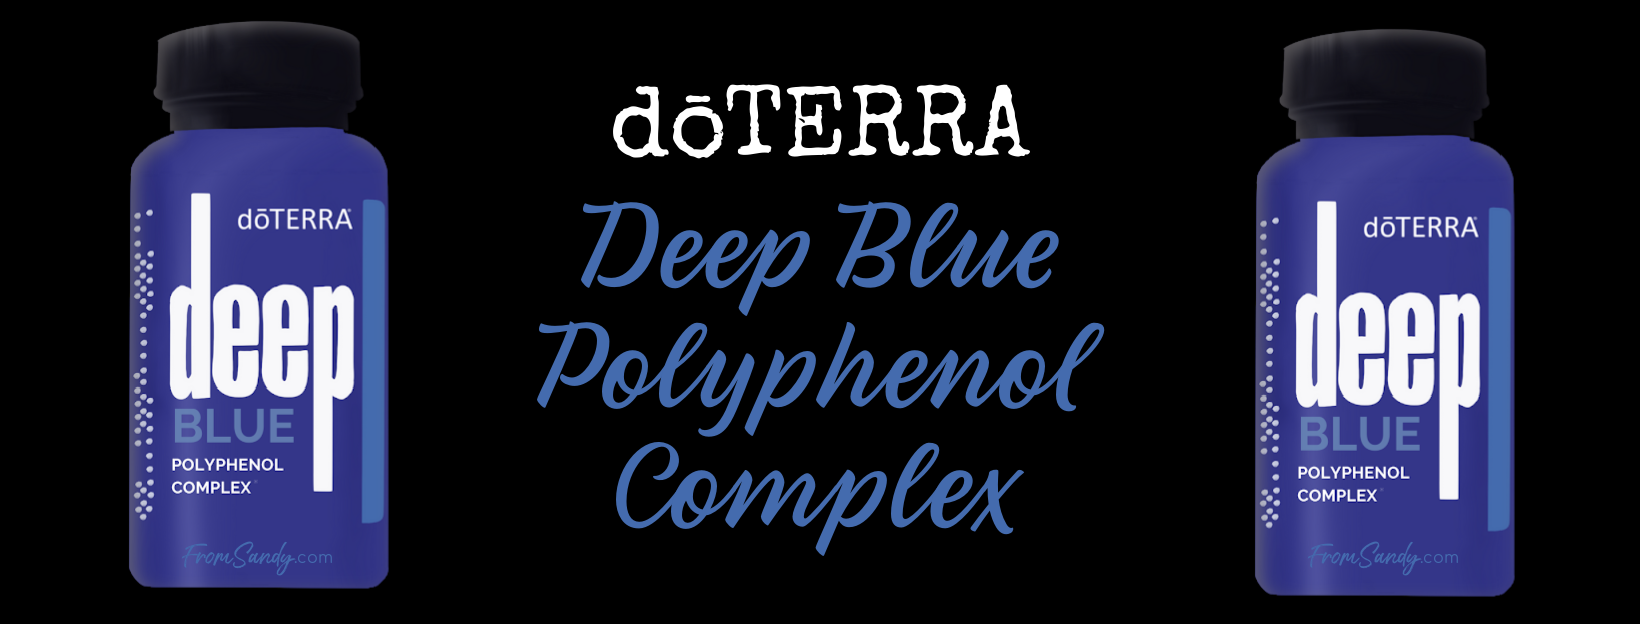 dōTERRA Deep Blue Polyphenol Complex | From Sandy